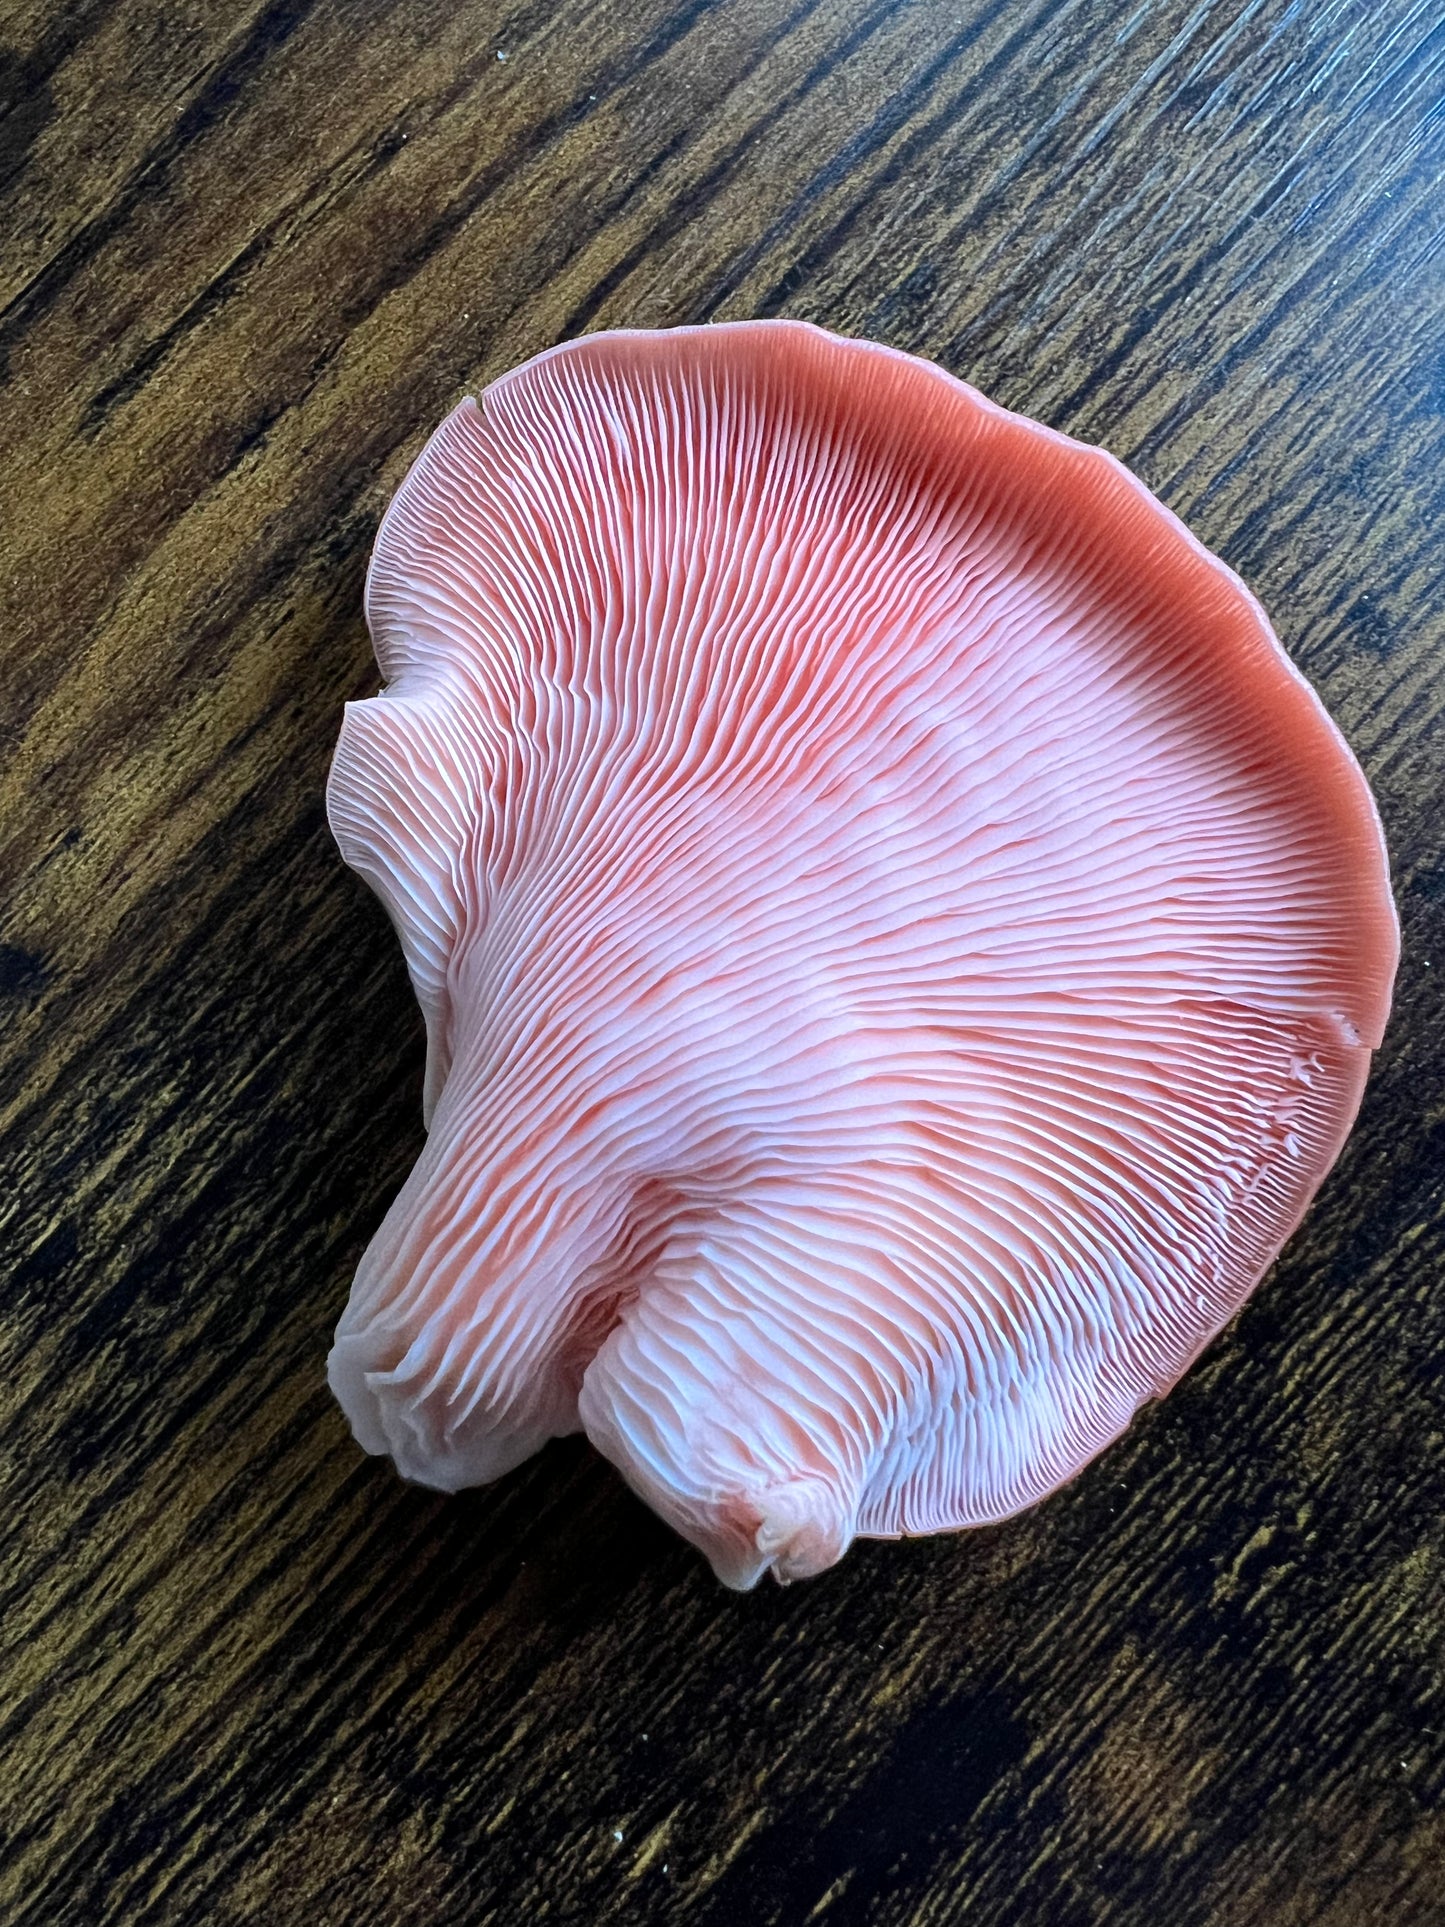 Dehydrated/ Dried Pink Oyster Mushrooms | Pleurotus djamor